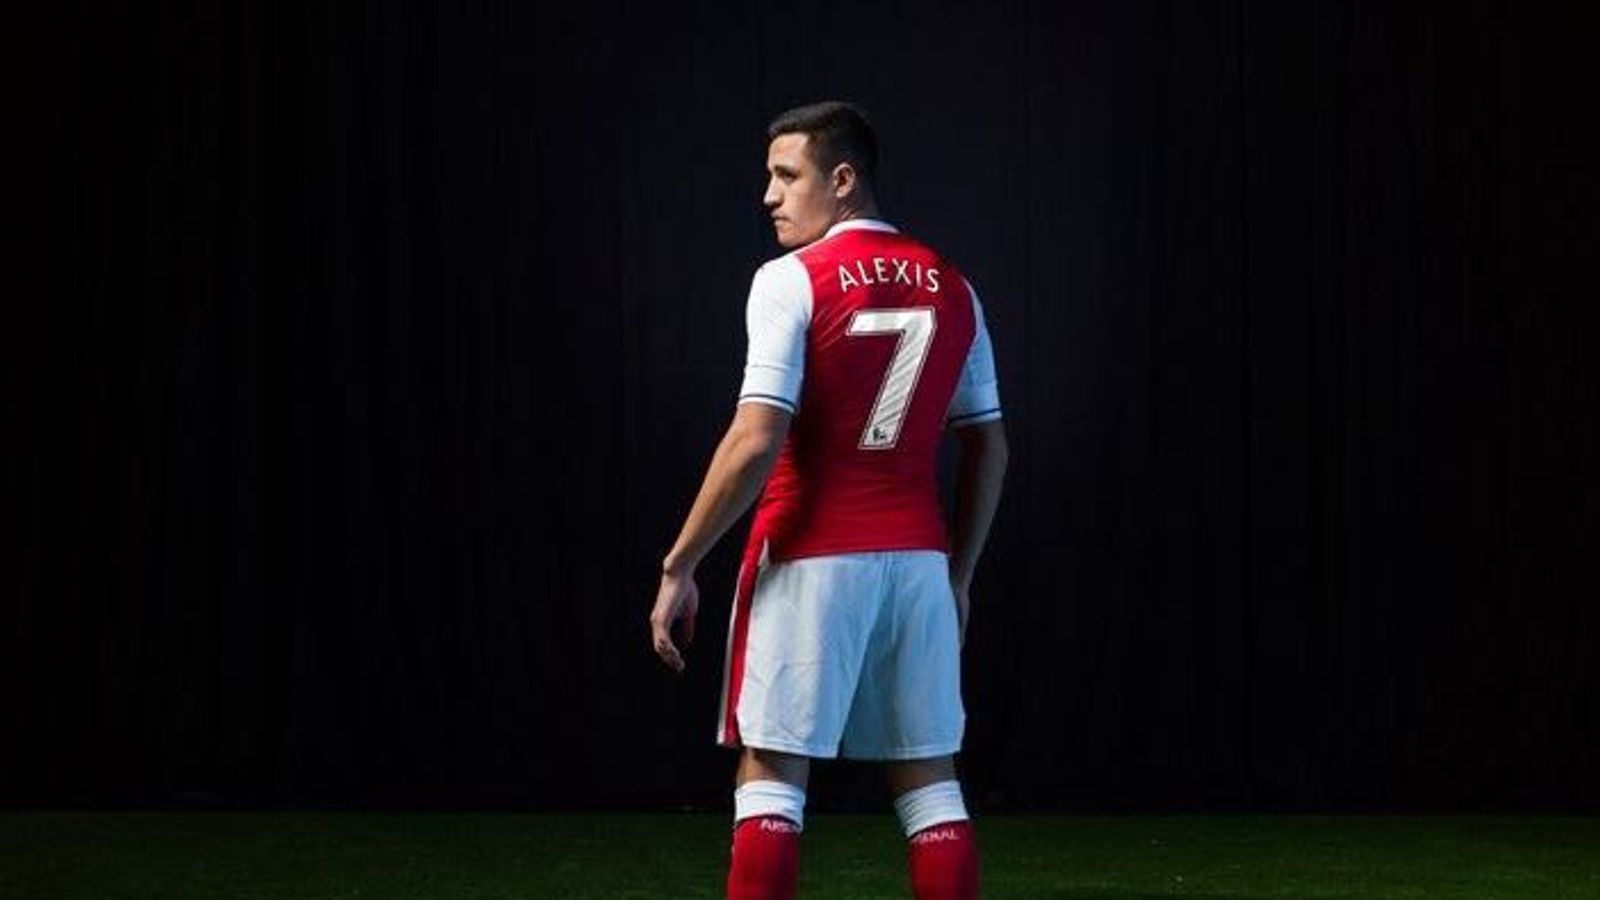 Arsenal's Alexis Sanchez to wear No 7 shirt next season, Football News